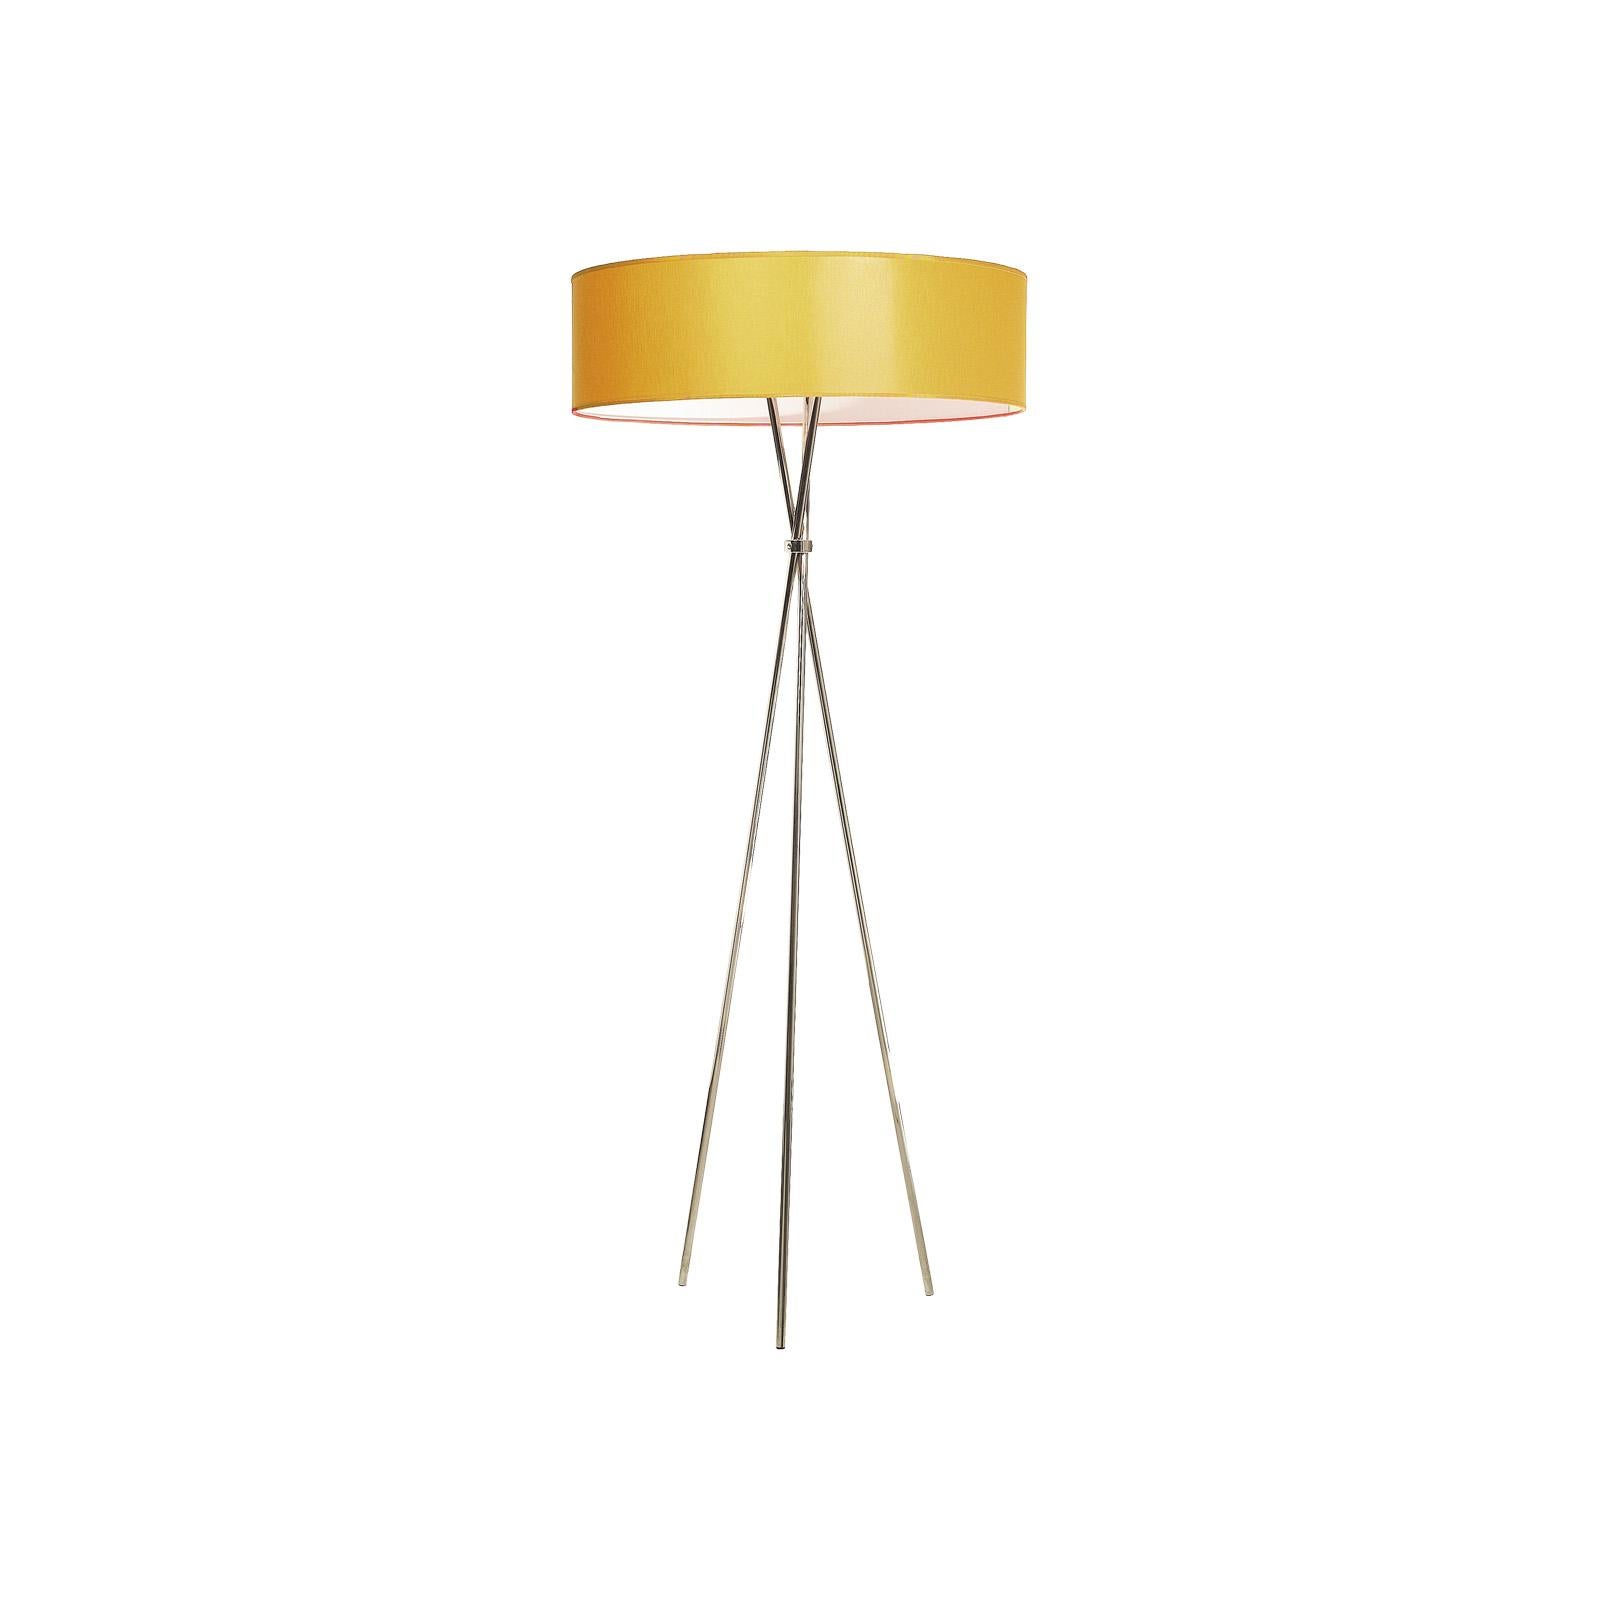 Austrian Modern Elegant Floor-Lamp with a Big Carton-Shade, 